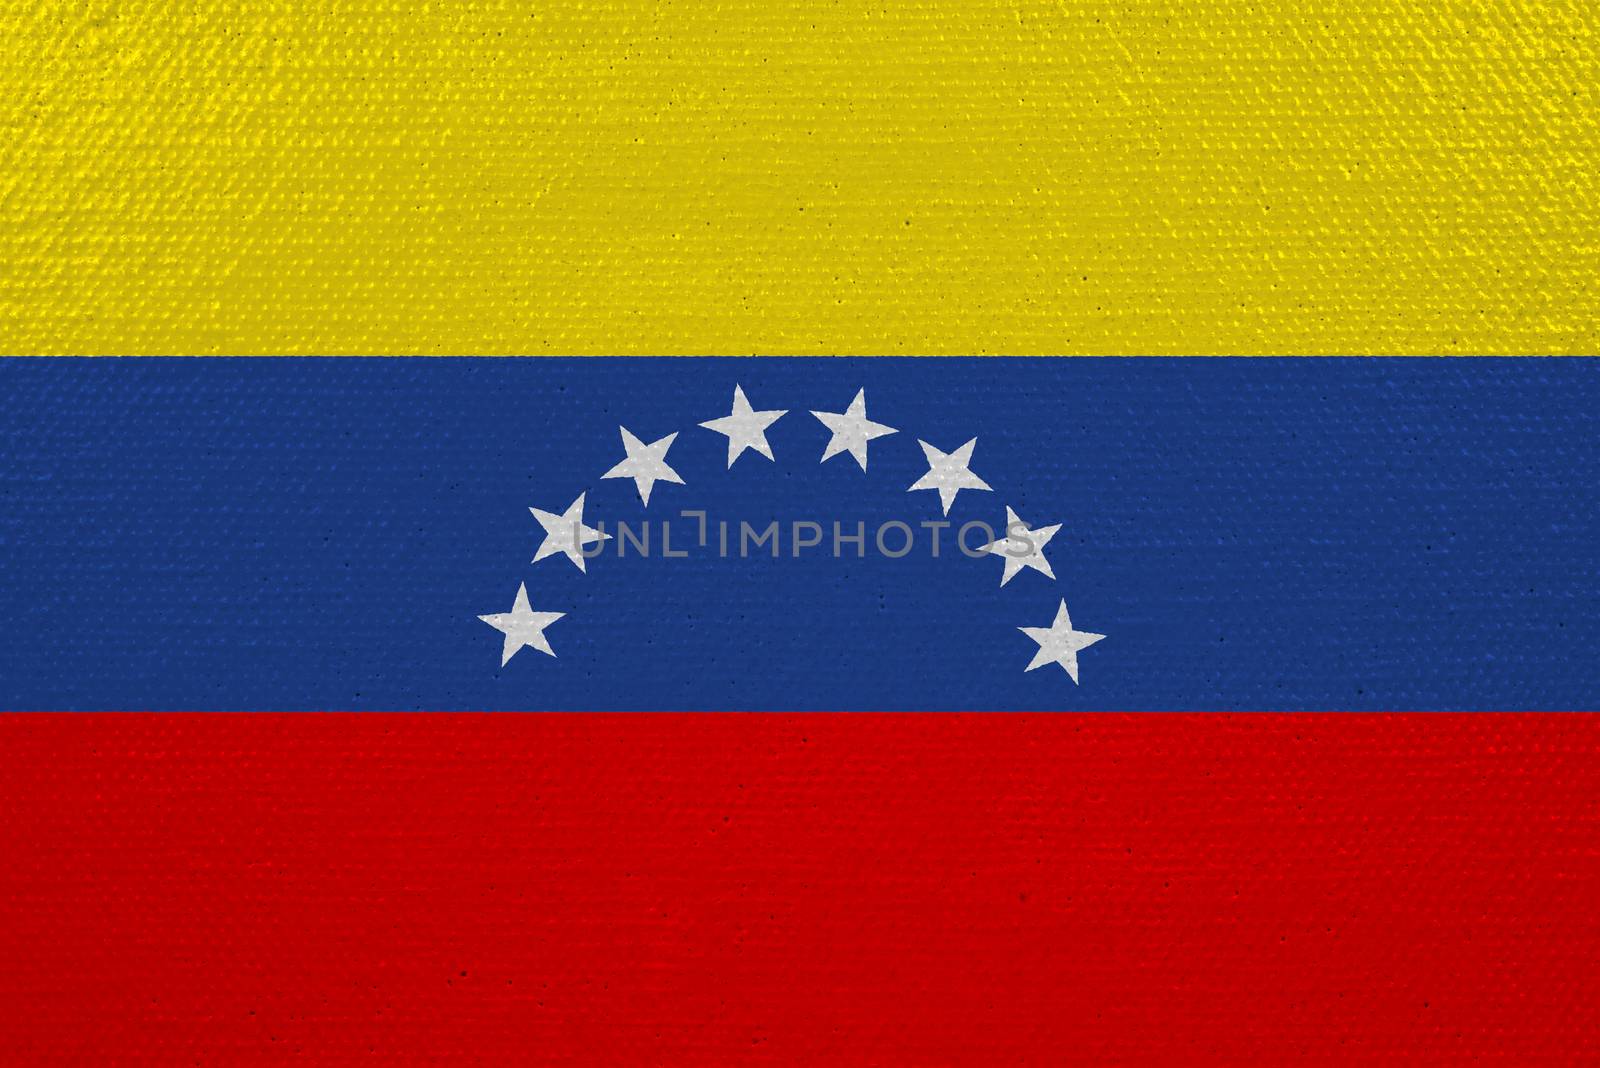 Venezuela flag on canvas. Patriotic background. National flag of Venezuela